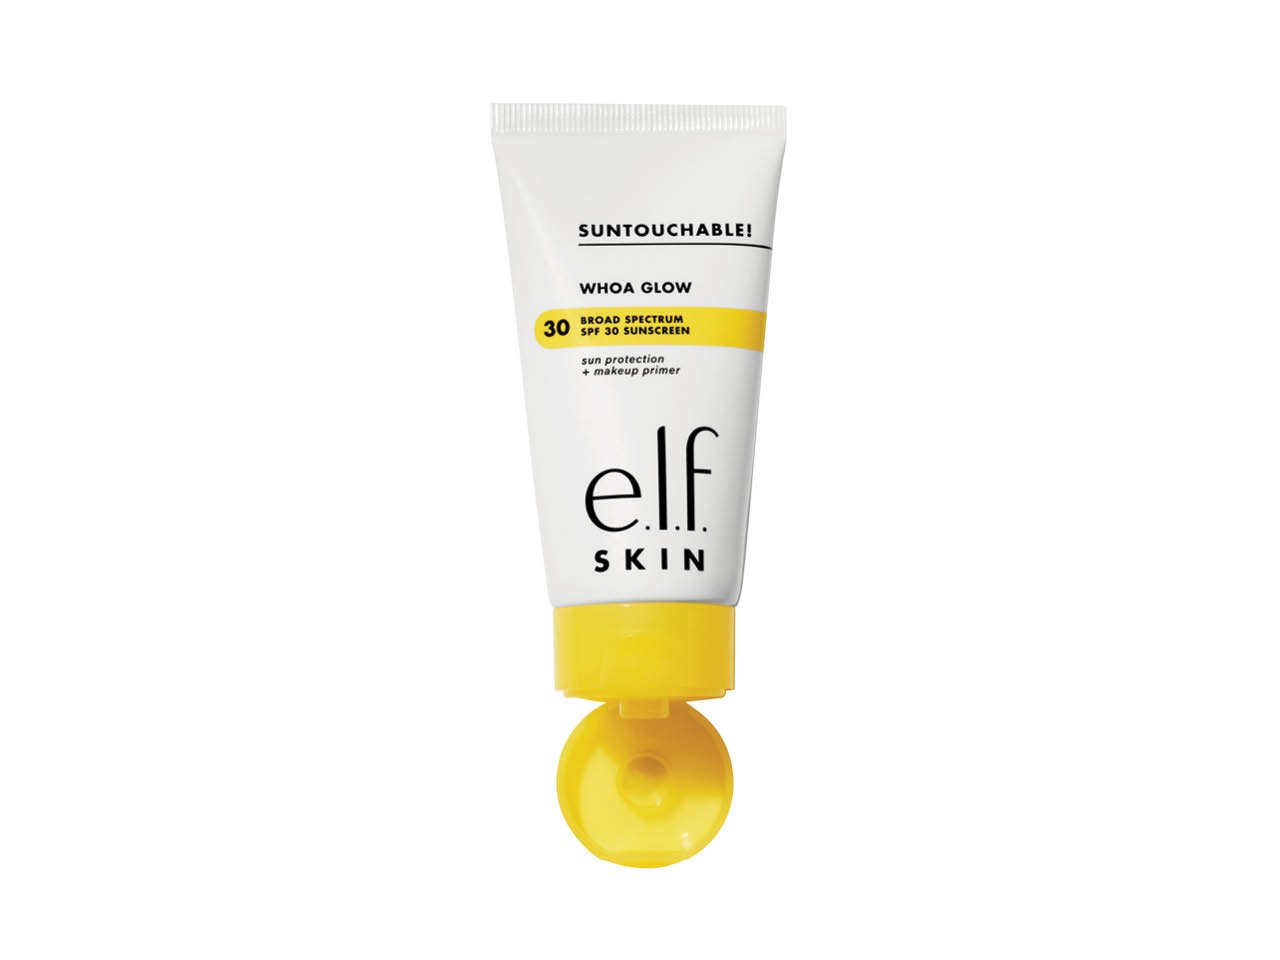 A white bottle with a yellow cap of E.l.f. Skin Suntouchable! Whoa Glow SPF 30 sunscreen.